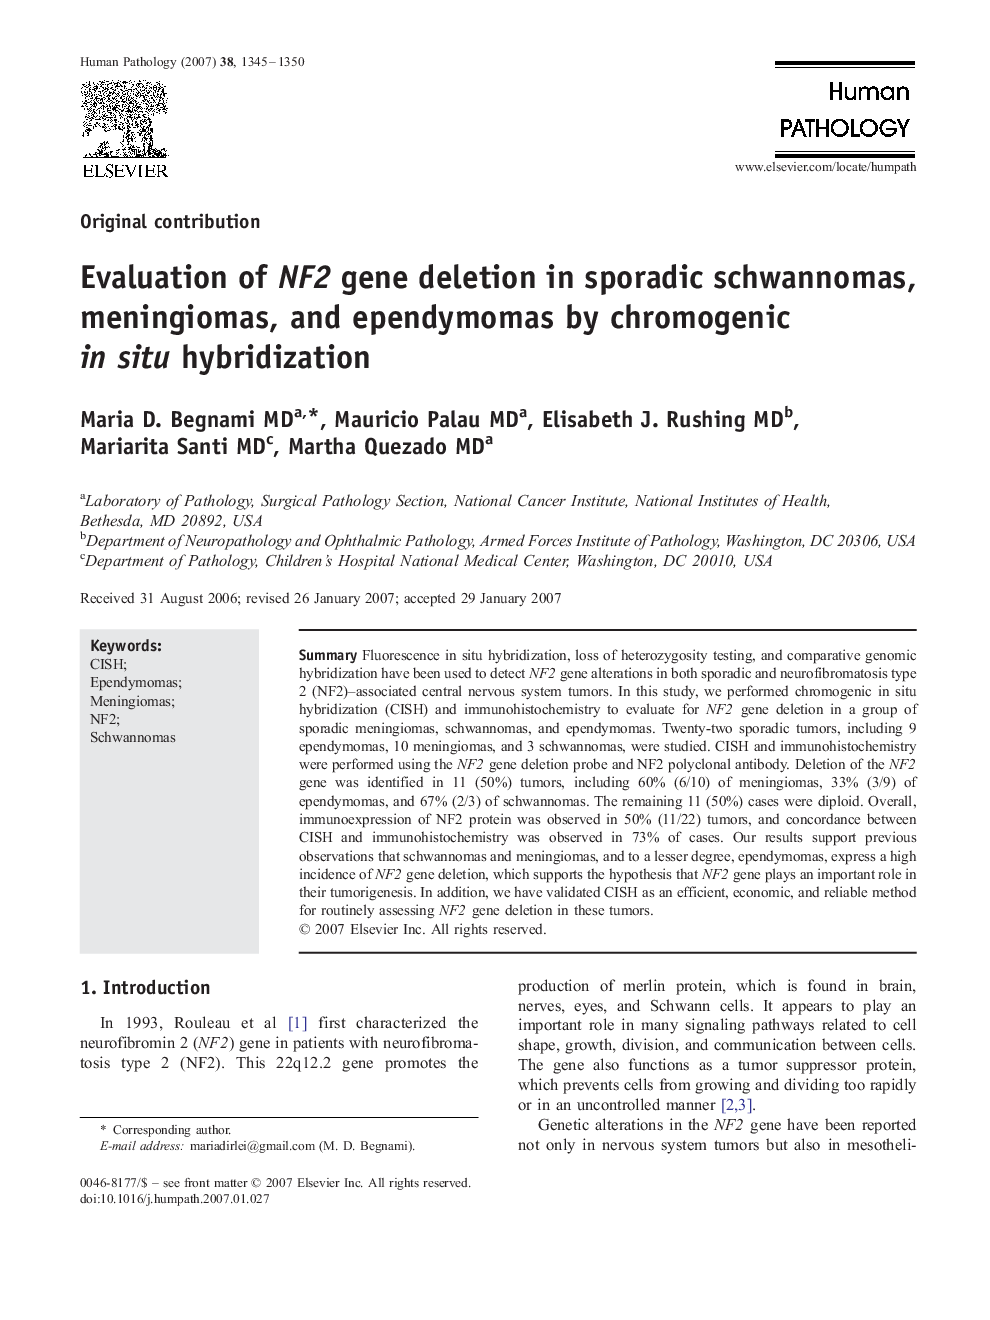 Evaluation of NF2 gene deletion in sporadic schwannomas, meningiomas, and ependymomas by chromogenic in situ hybridization